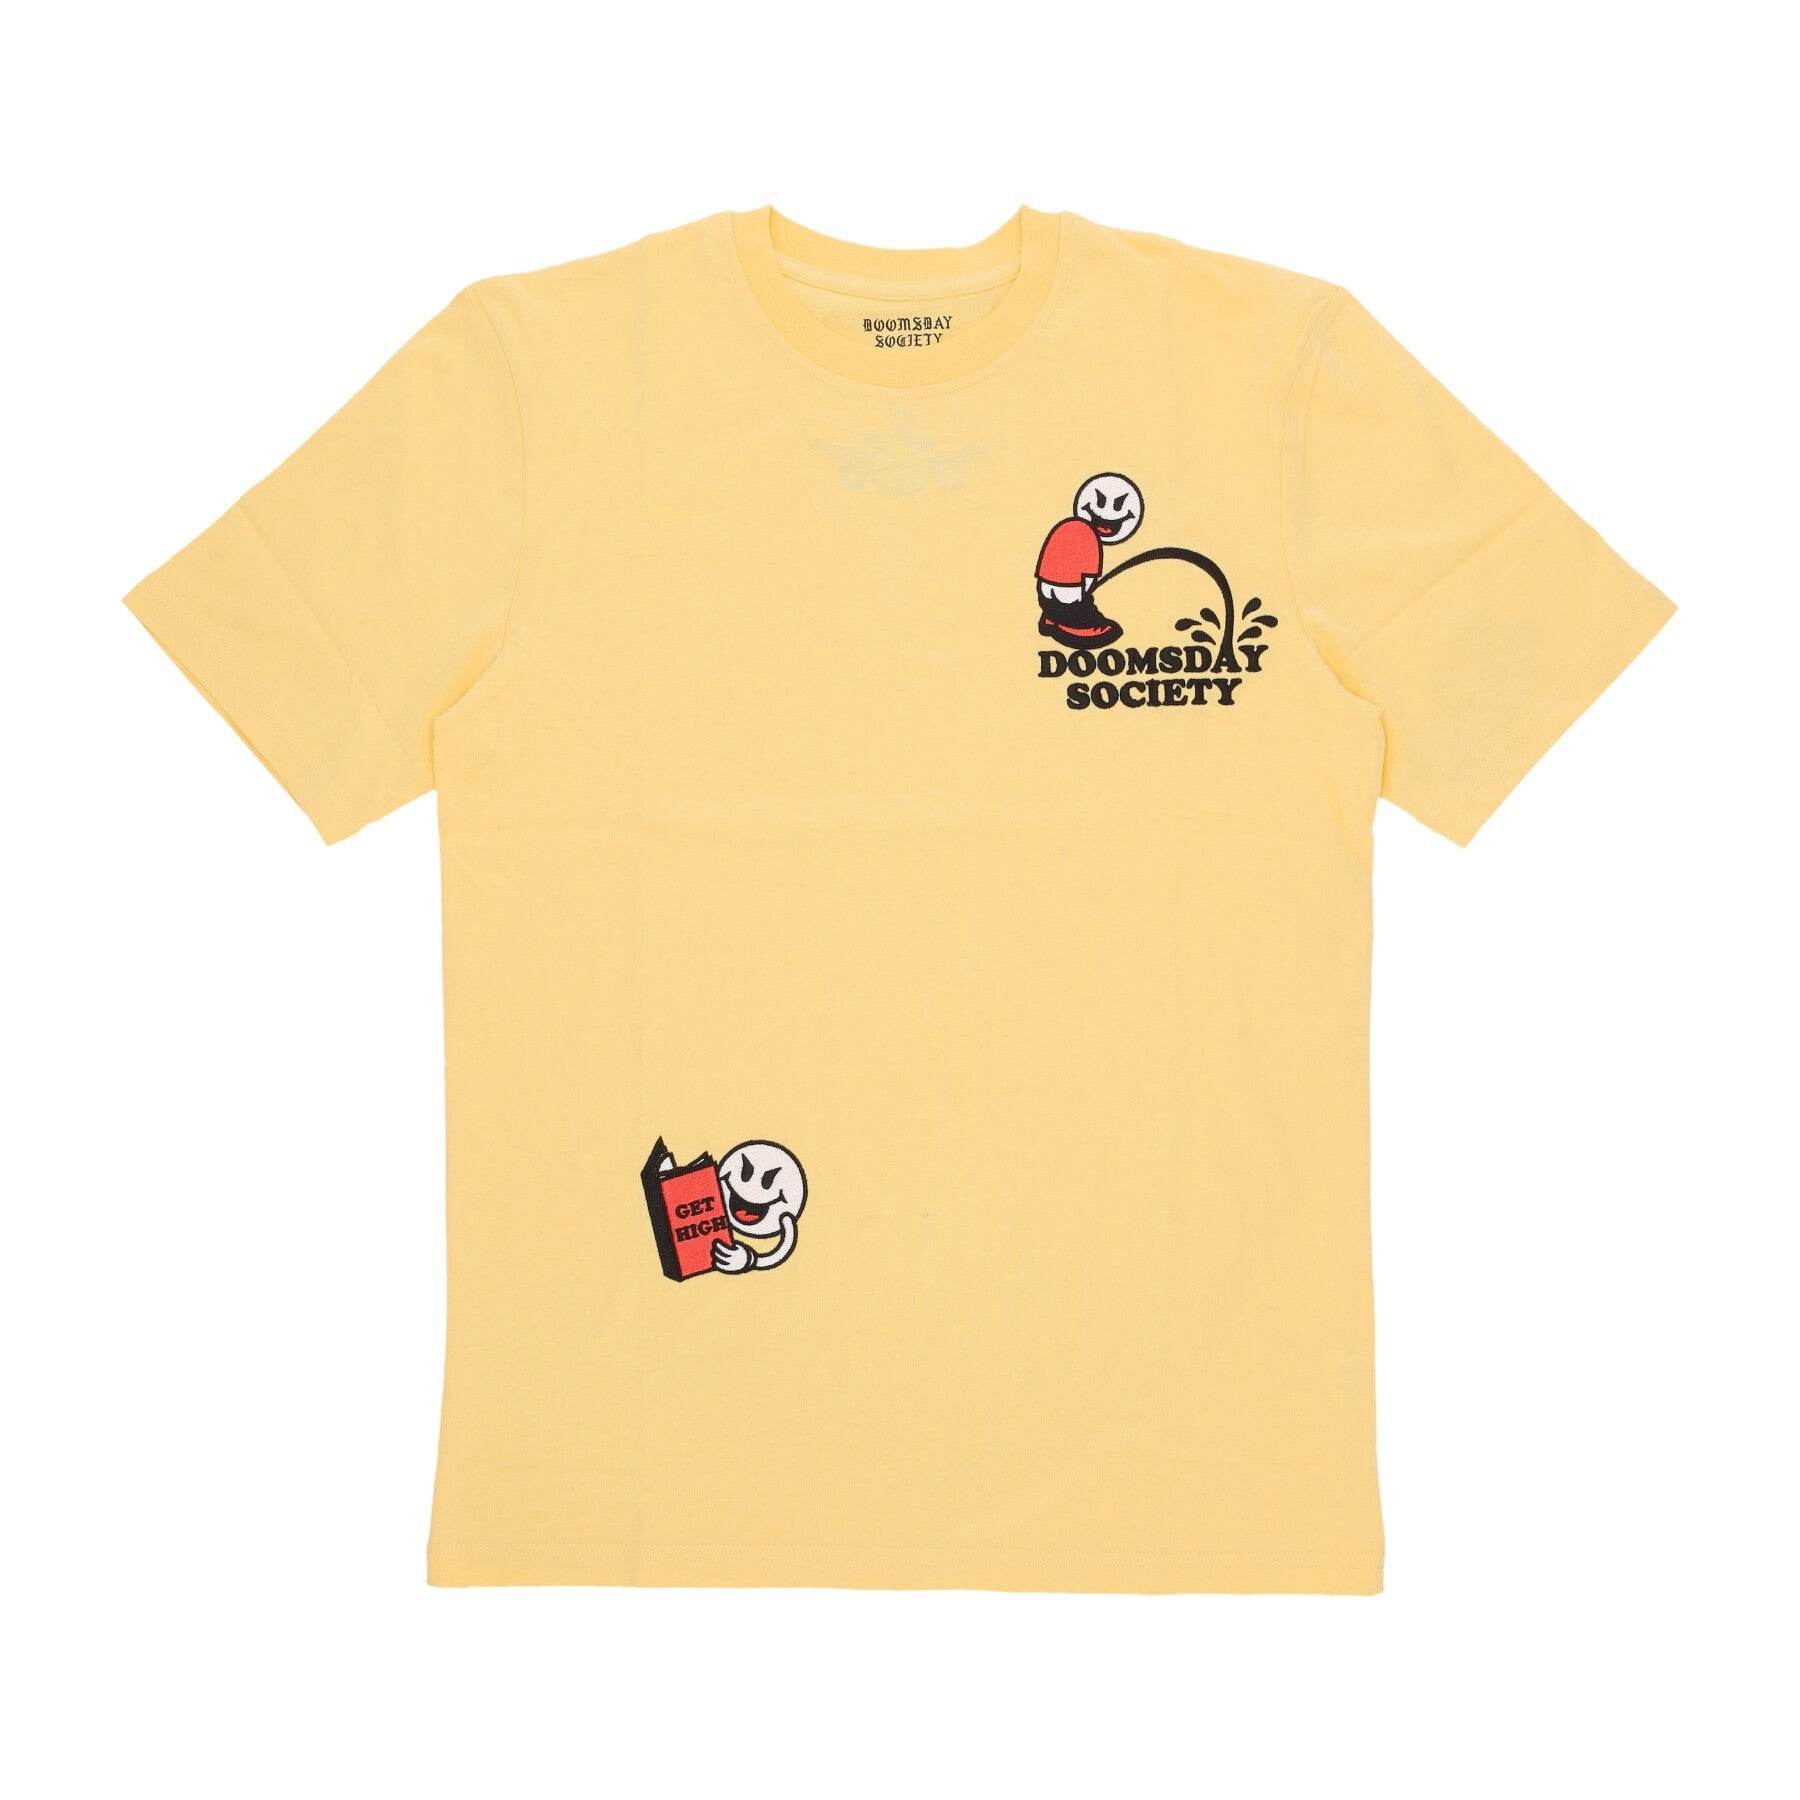 Men's Pissing Tee Gold/yellow T-shirt